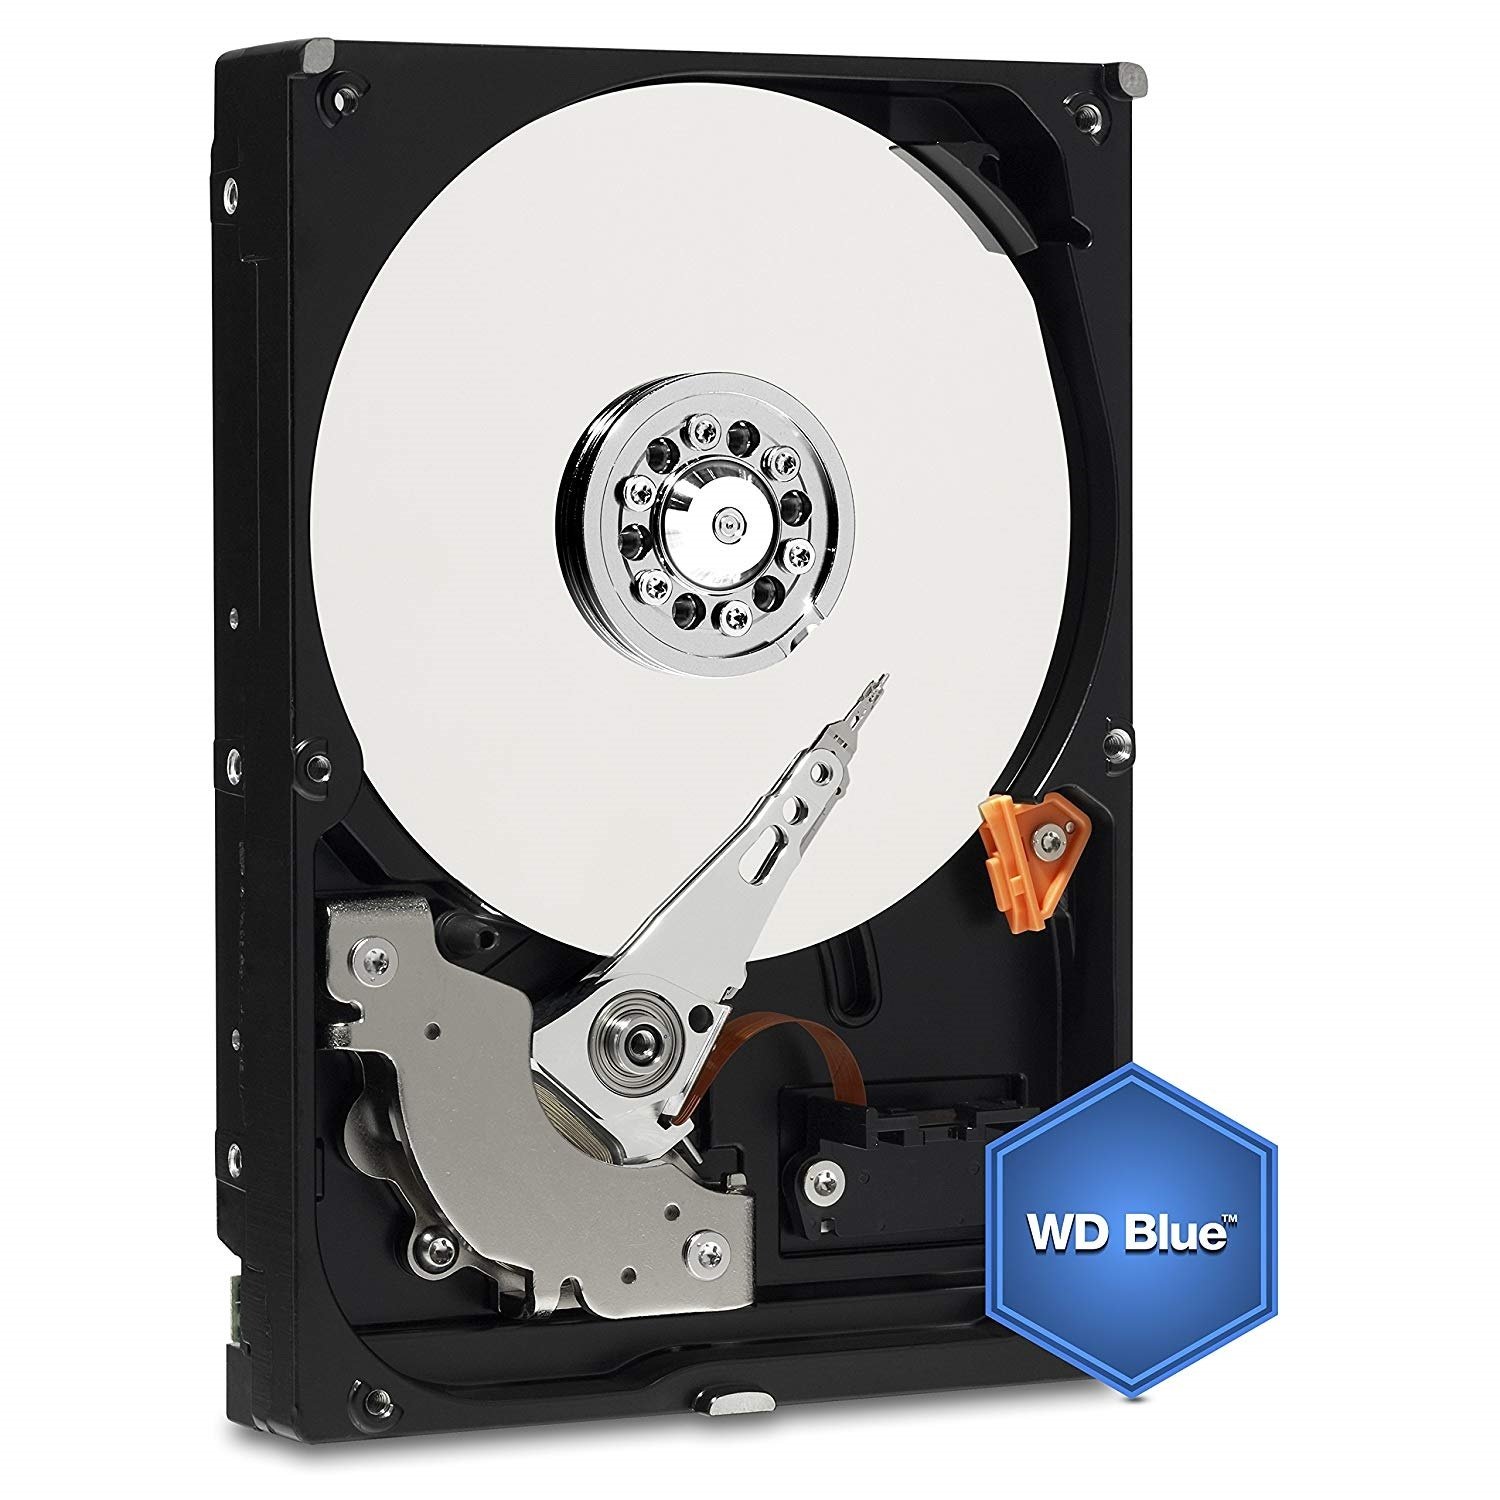 WD Blue 4TB Desktop Hard Drive Review